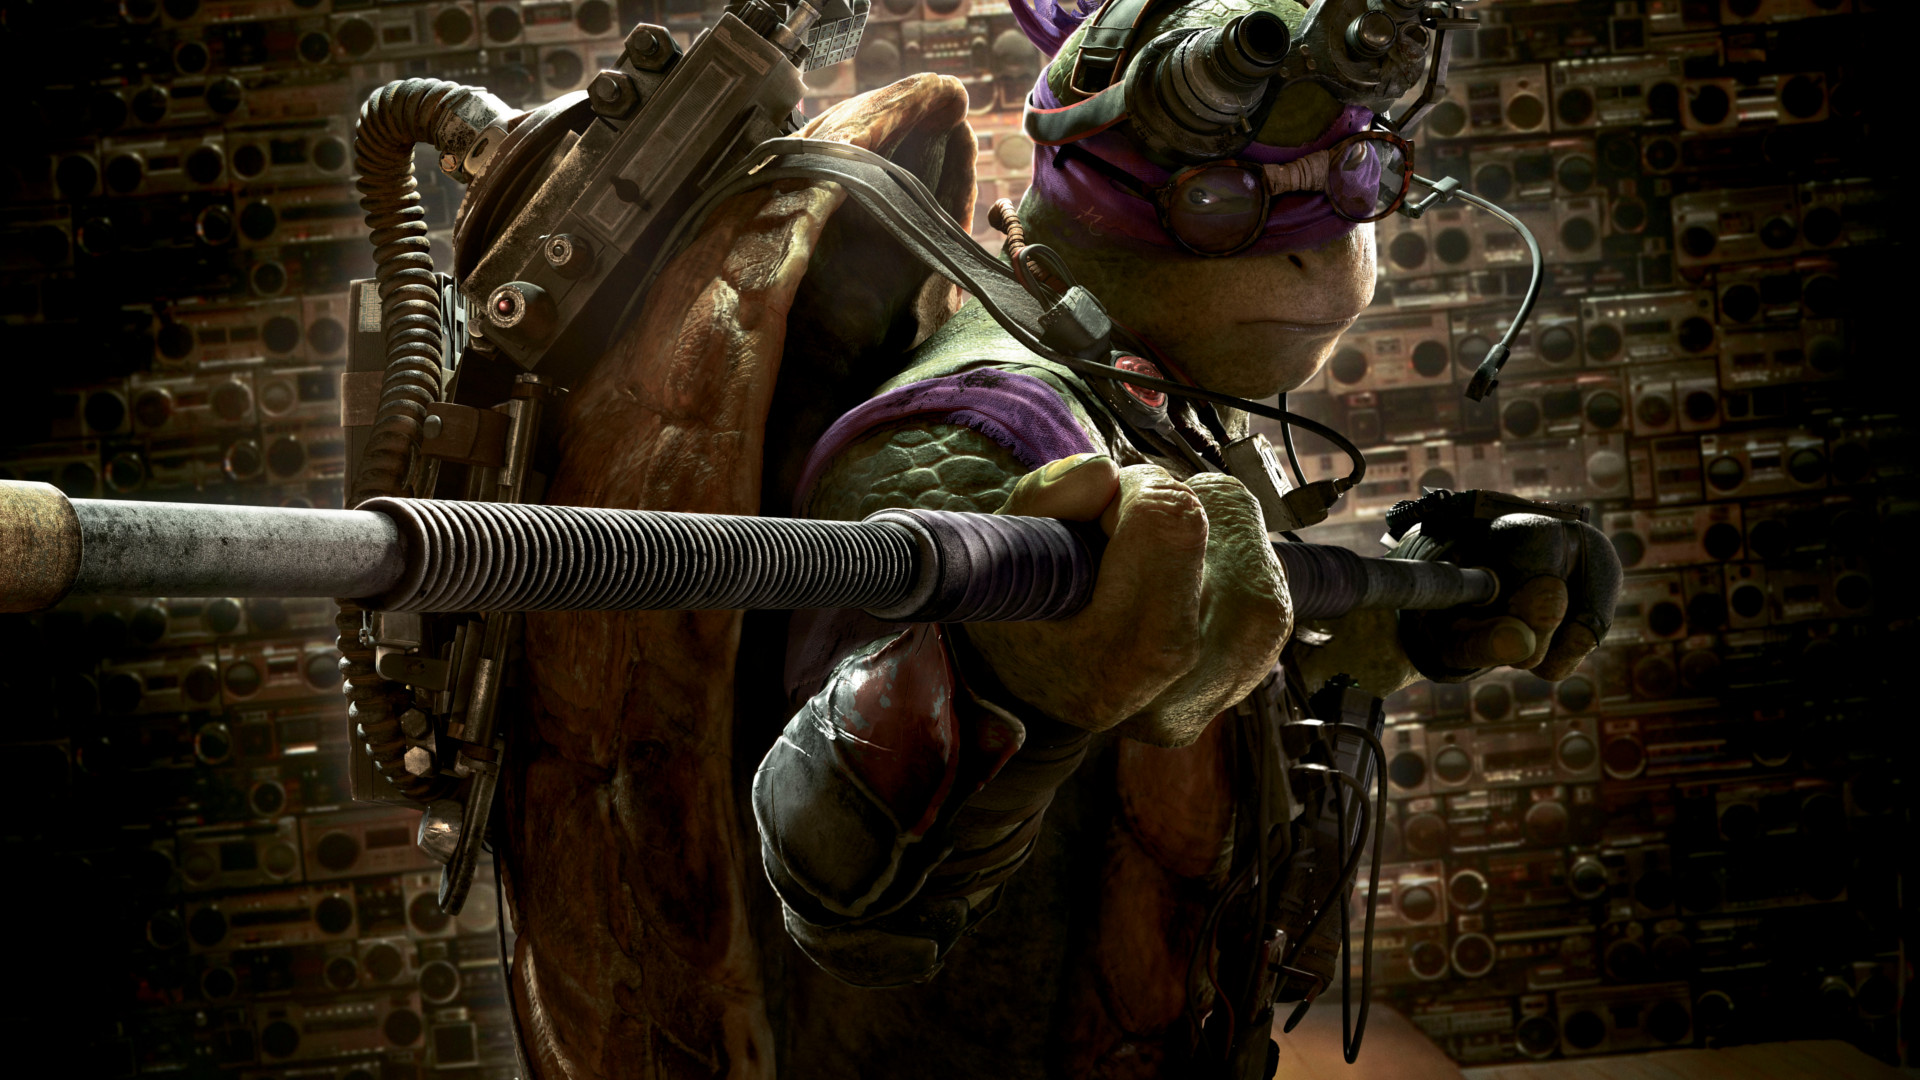 Baixar papel de parede para celular de Filme, Donatello (Tmnt), As Tartarugas Ninja gratuito.